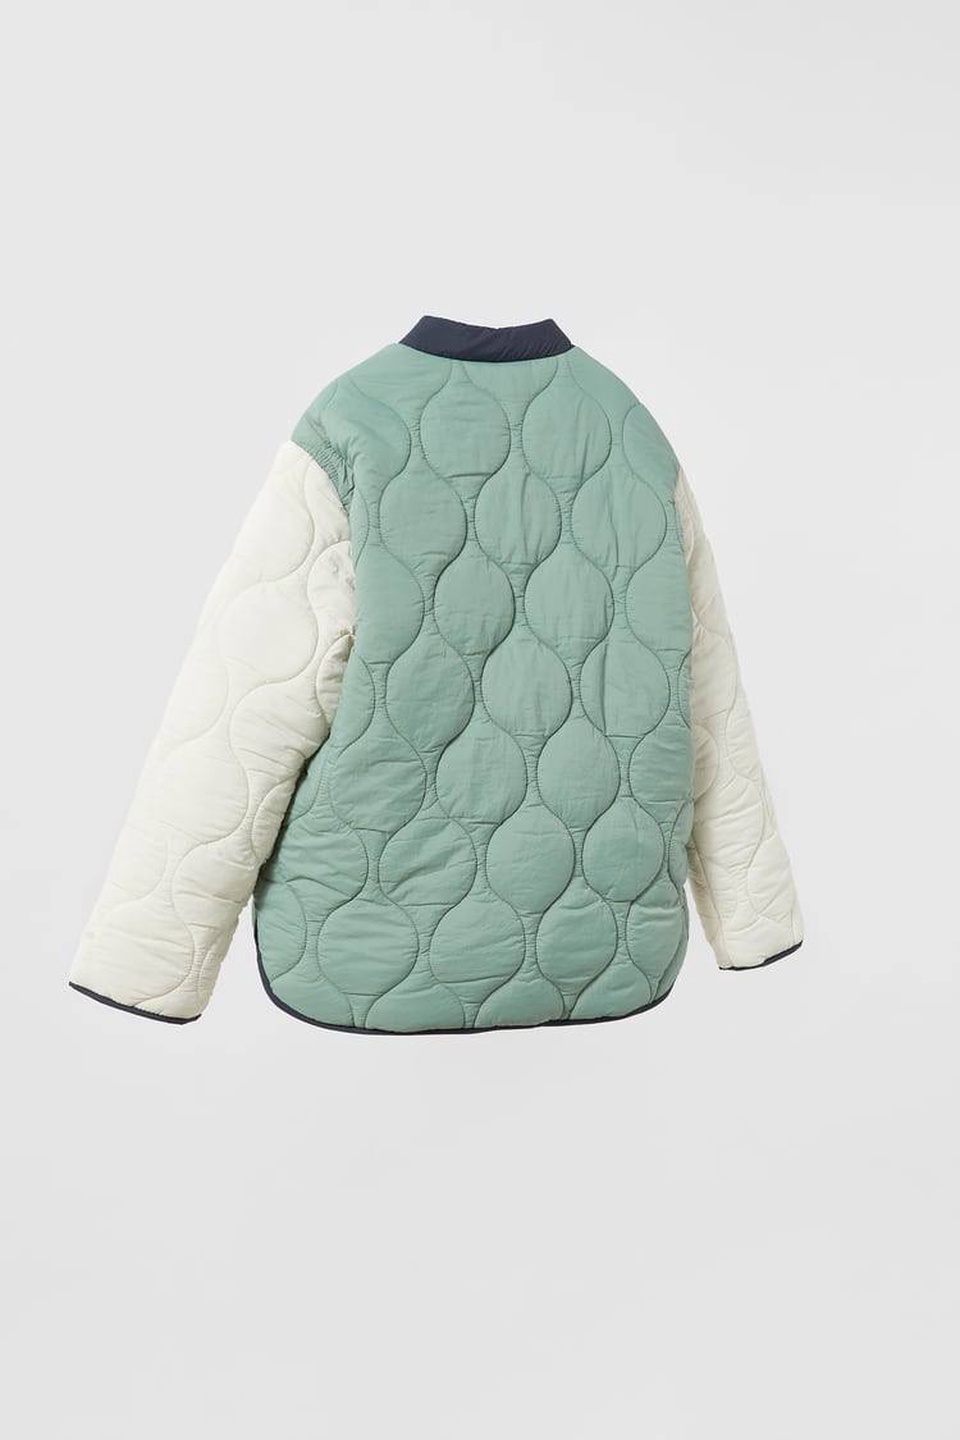 Куртка Zara kids - 2 199 ₽, заказать онлайн.